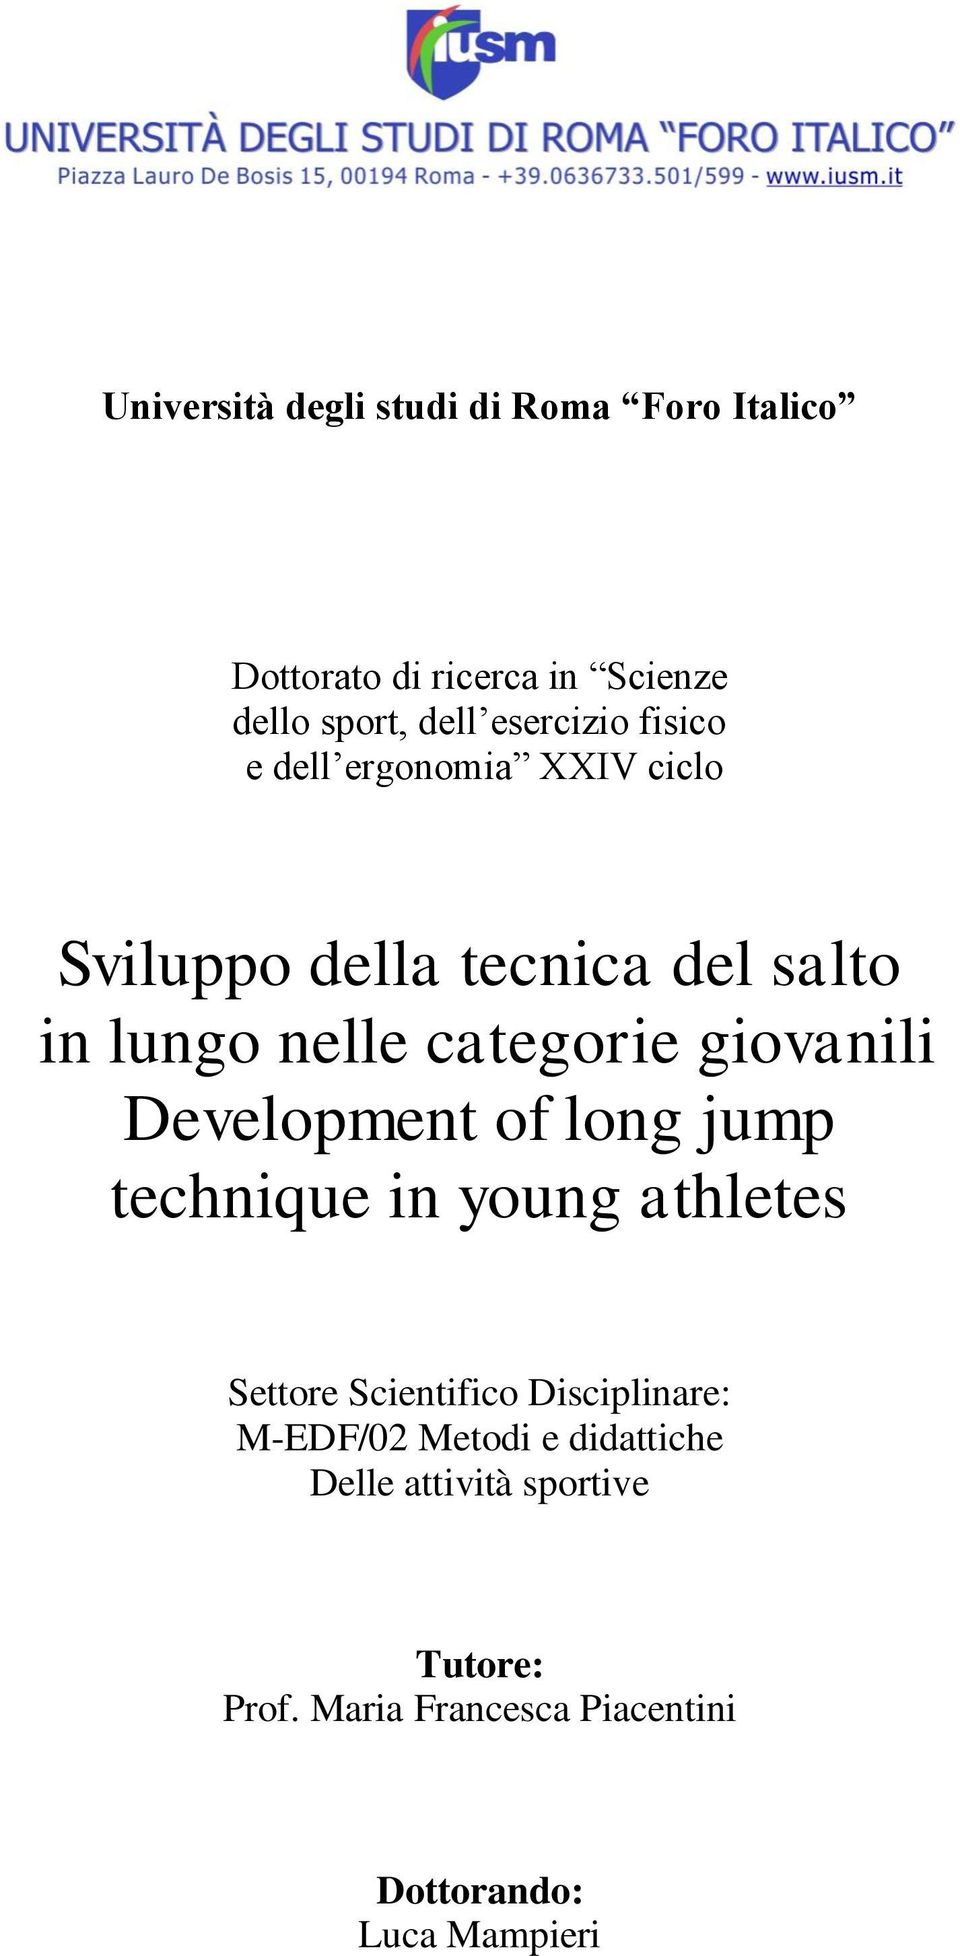 Development of long jump technique in young athletes Settore Scientifico Disciplinare: M-EDF/02 Metodi